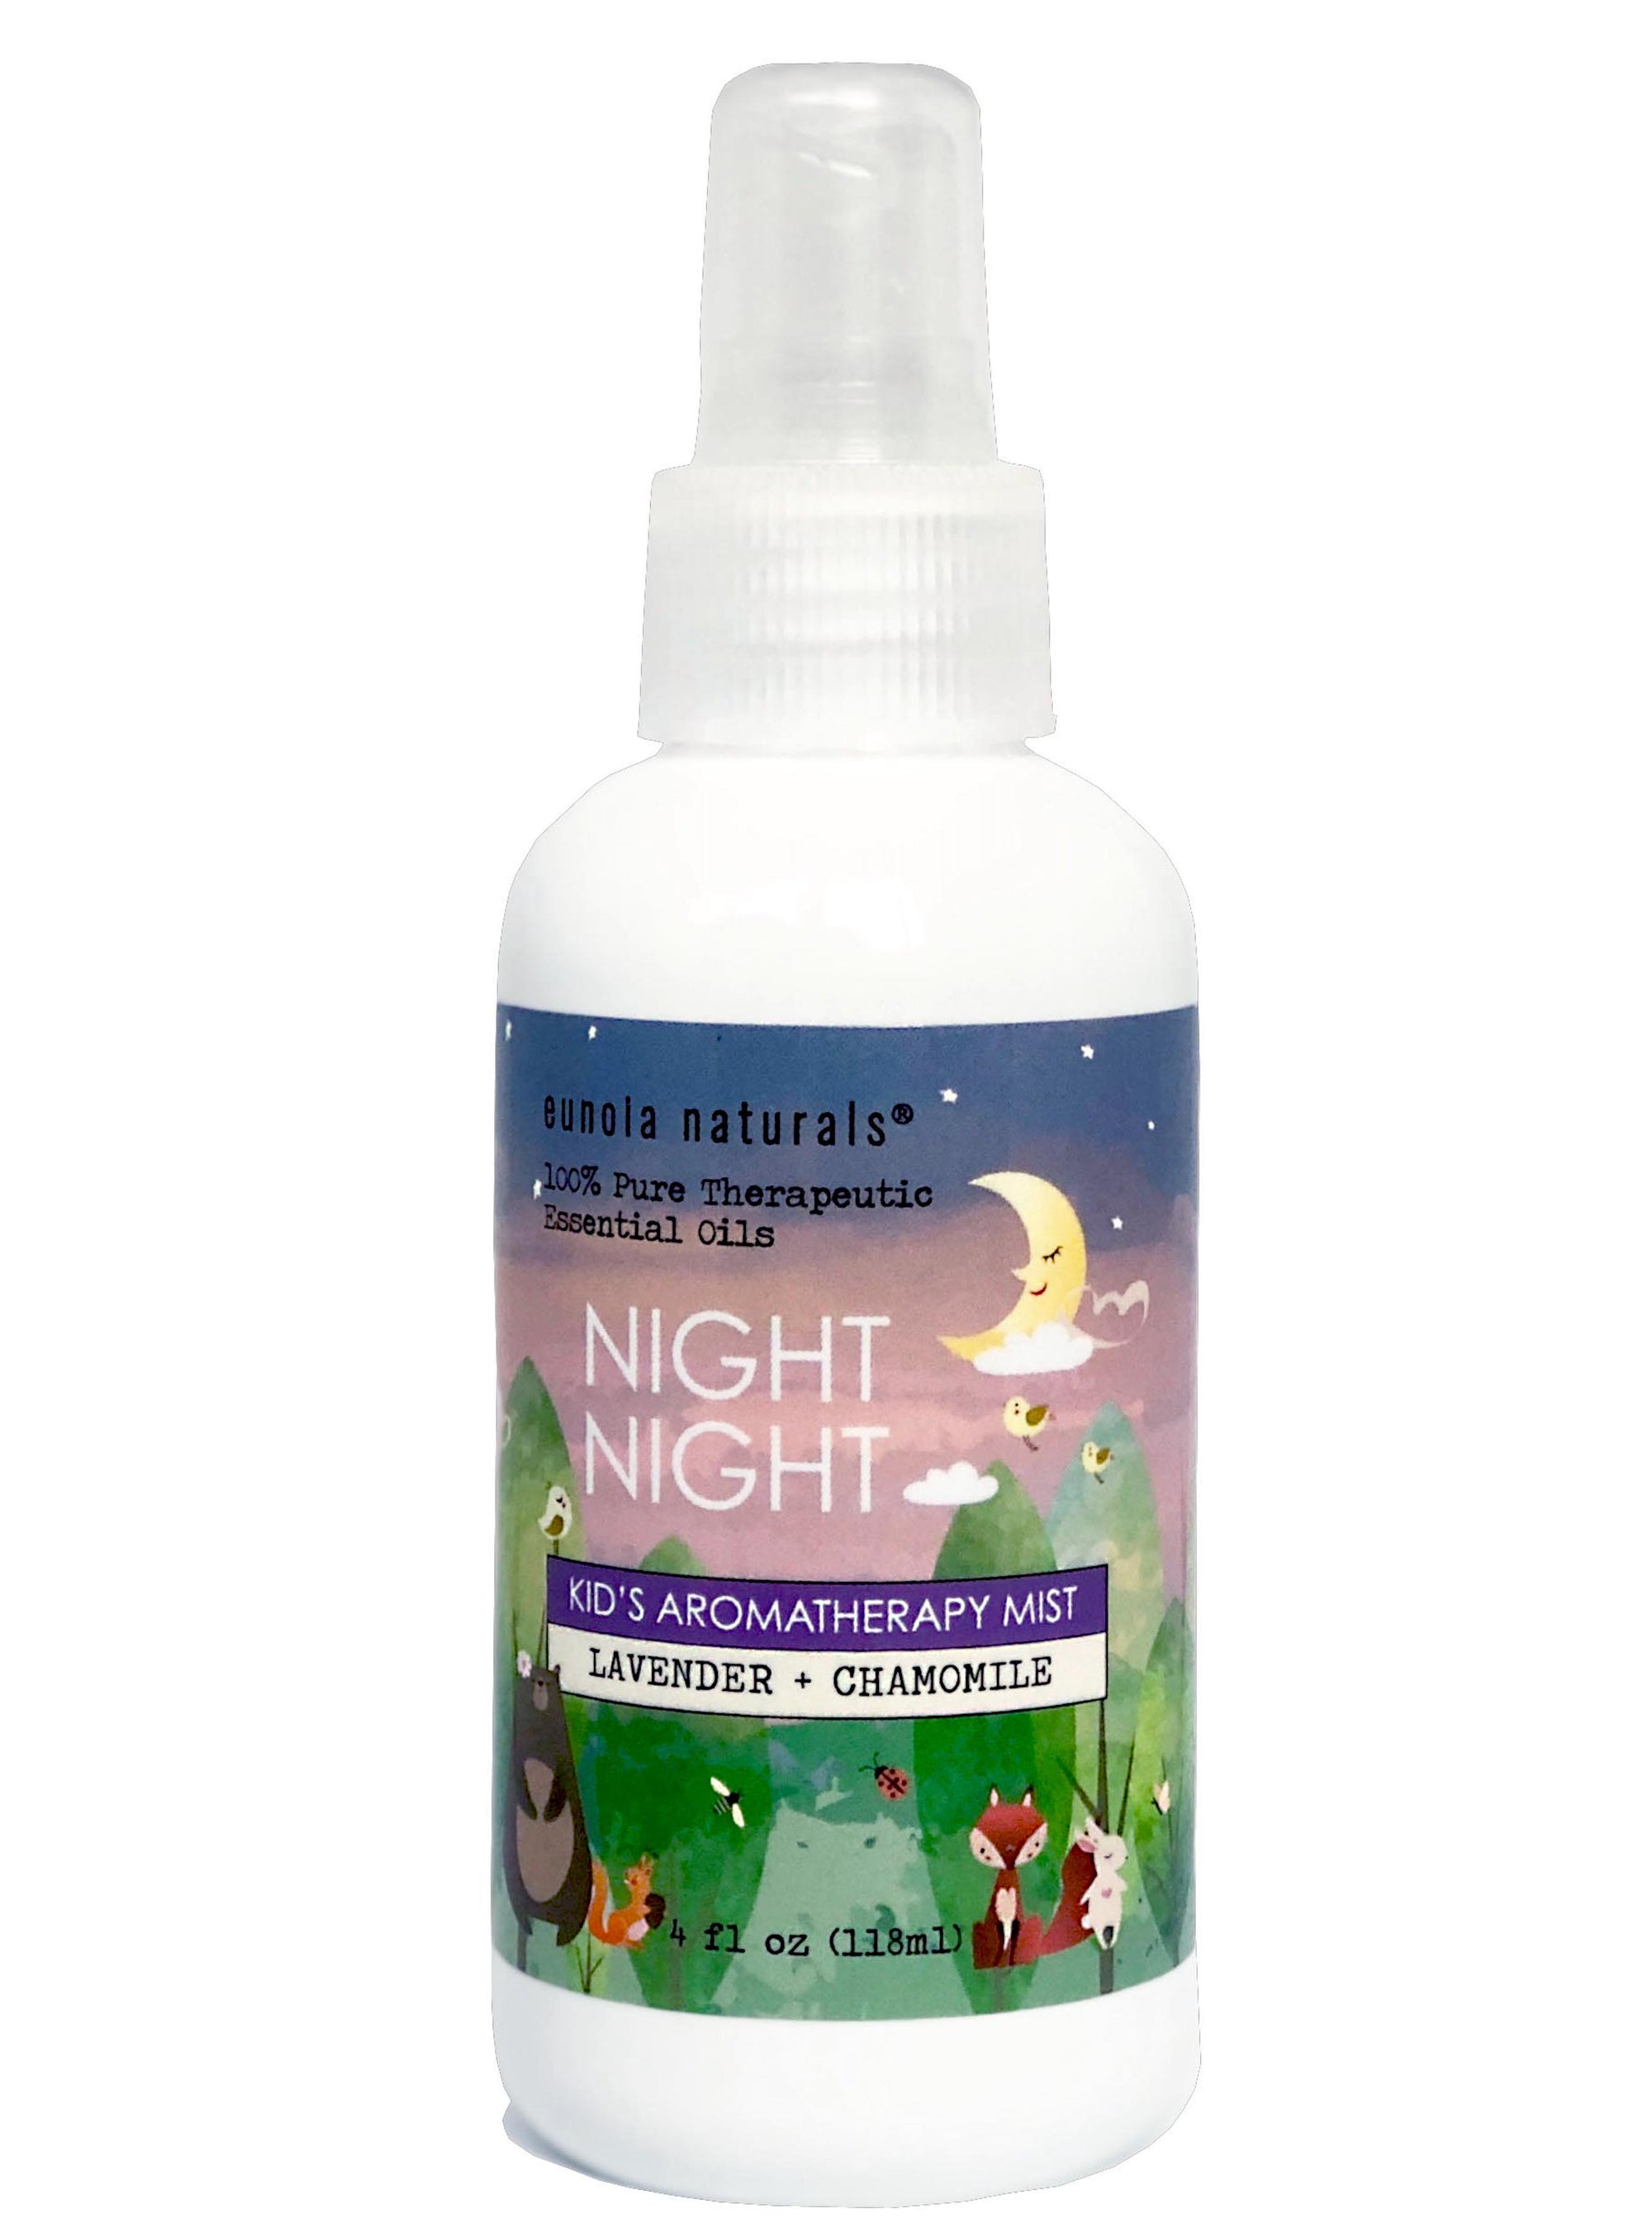 NIGHT NIGHT -Kid's Lavender + Chamomile Aromatherapy Mist, Kid Safe Sleep Spray, All Natural + Healthy Bedtime Spray